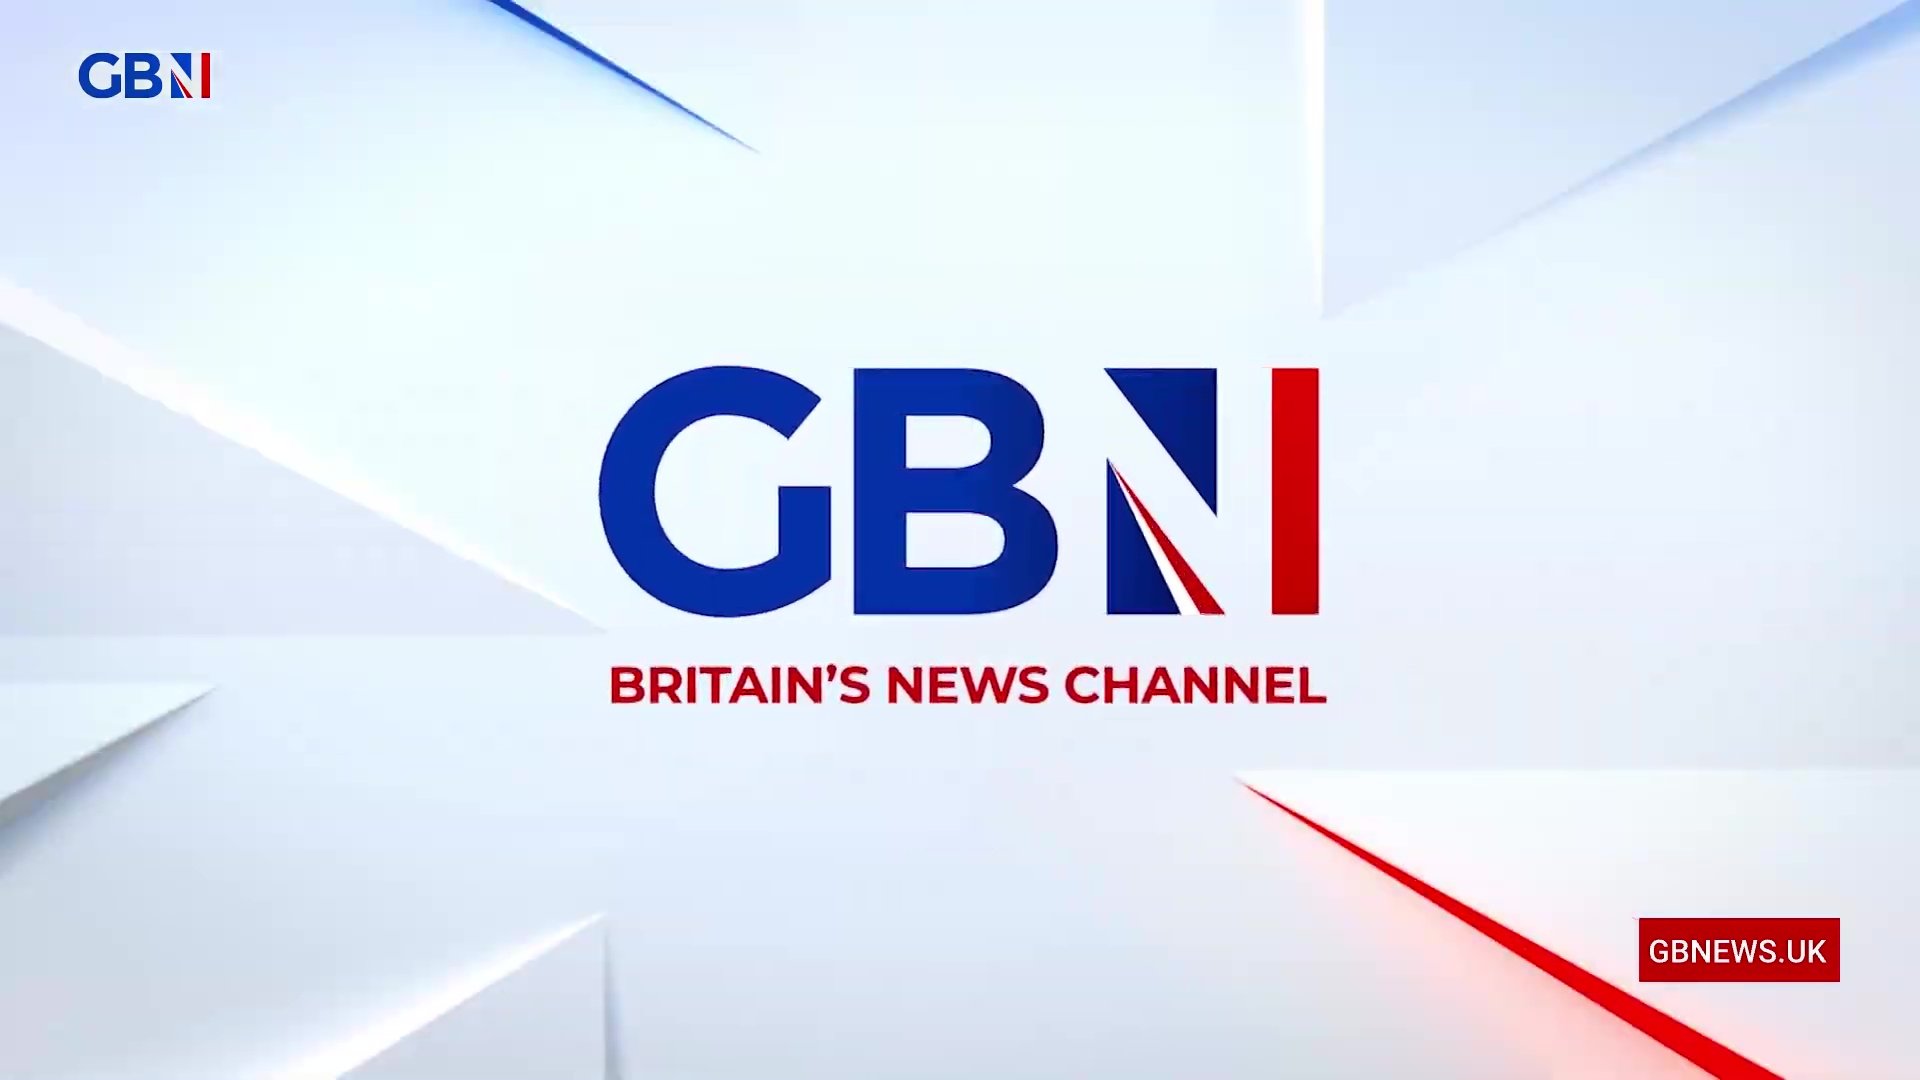 GB News Radio GB News Promo